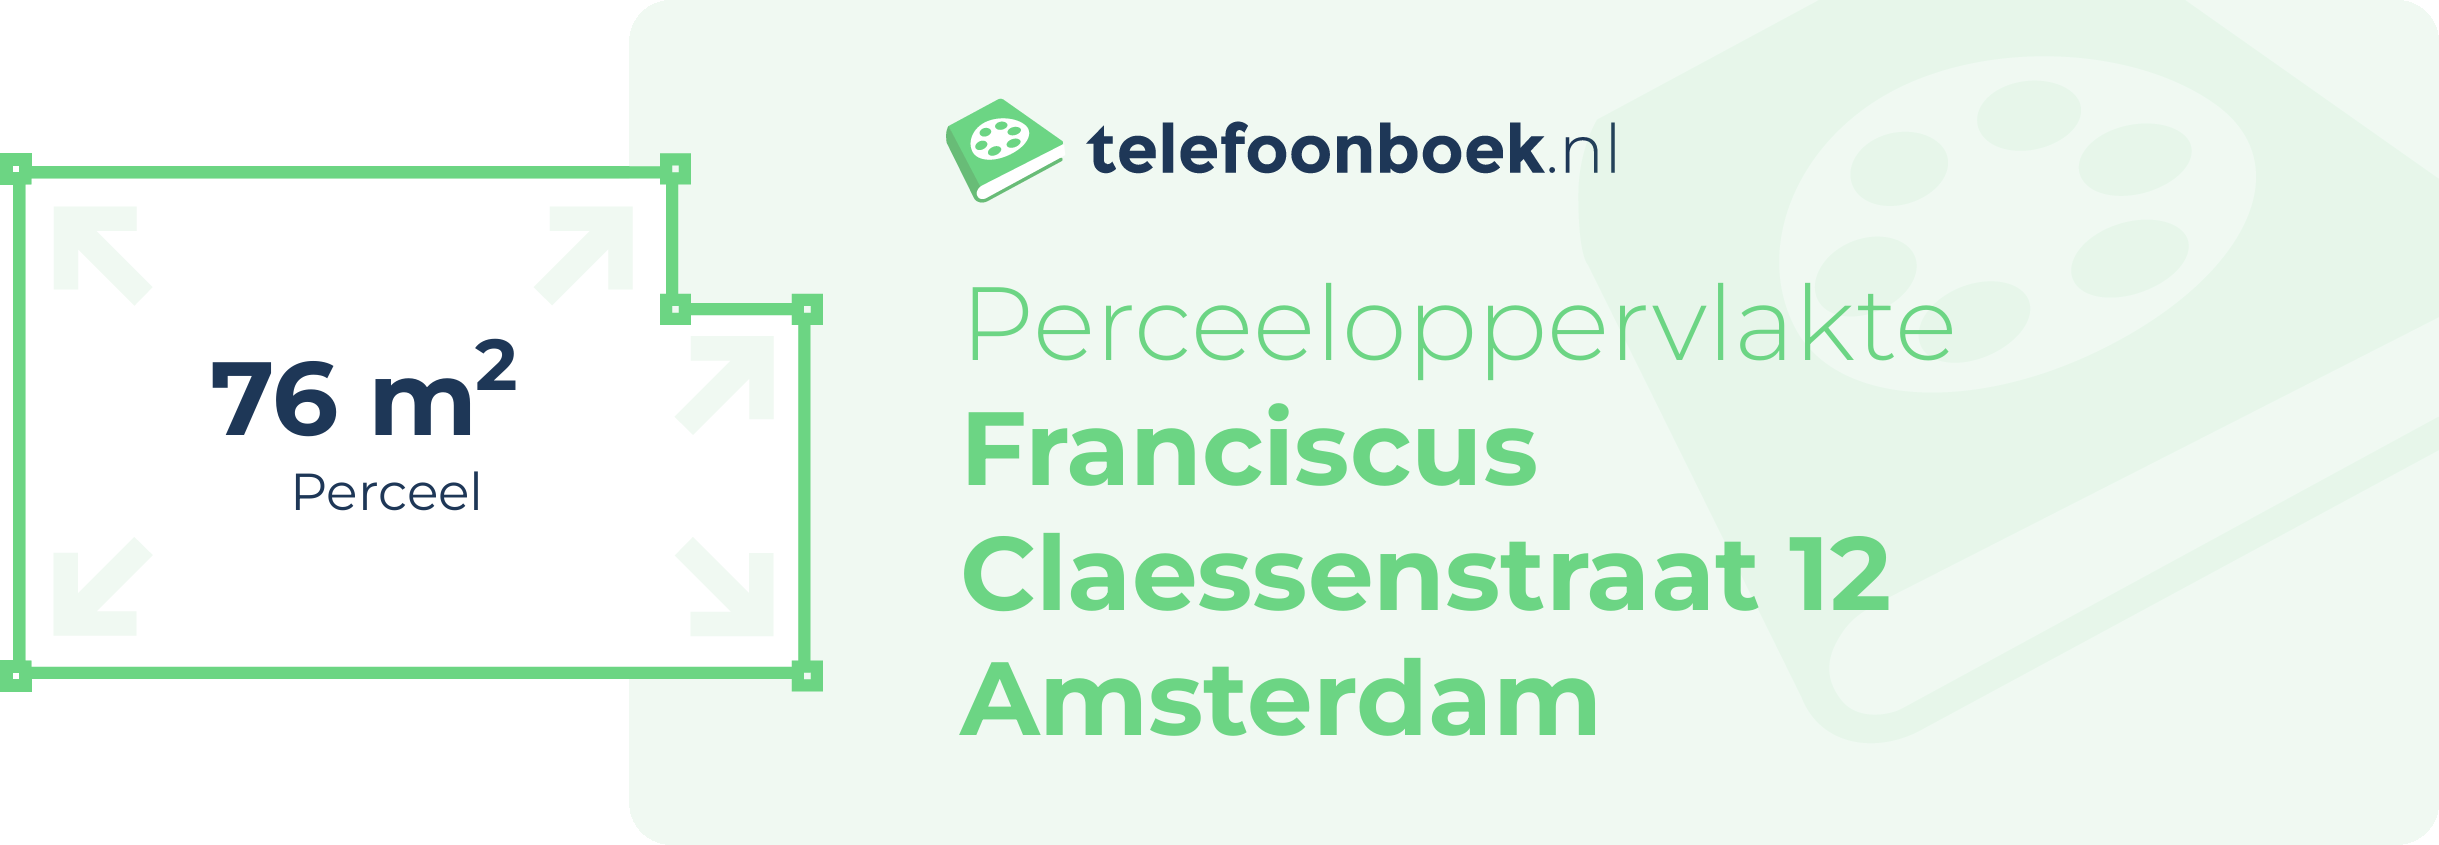 Perceeloppervlakte Franciscus Claessenstraat 12 Amsterdam